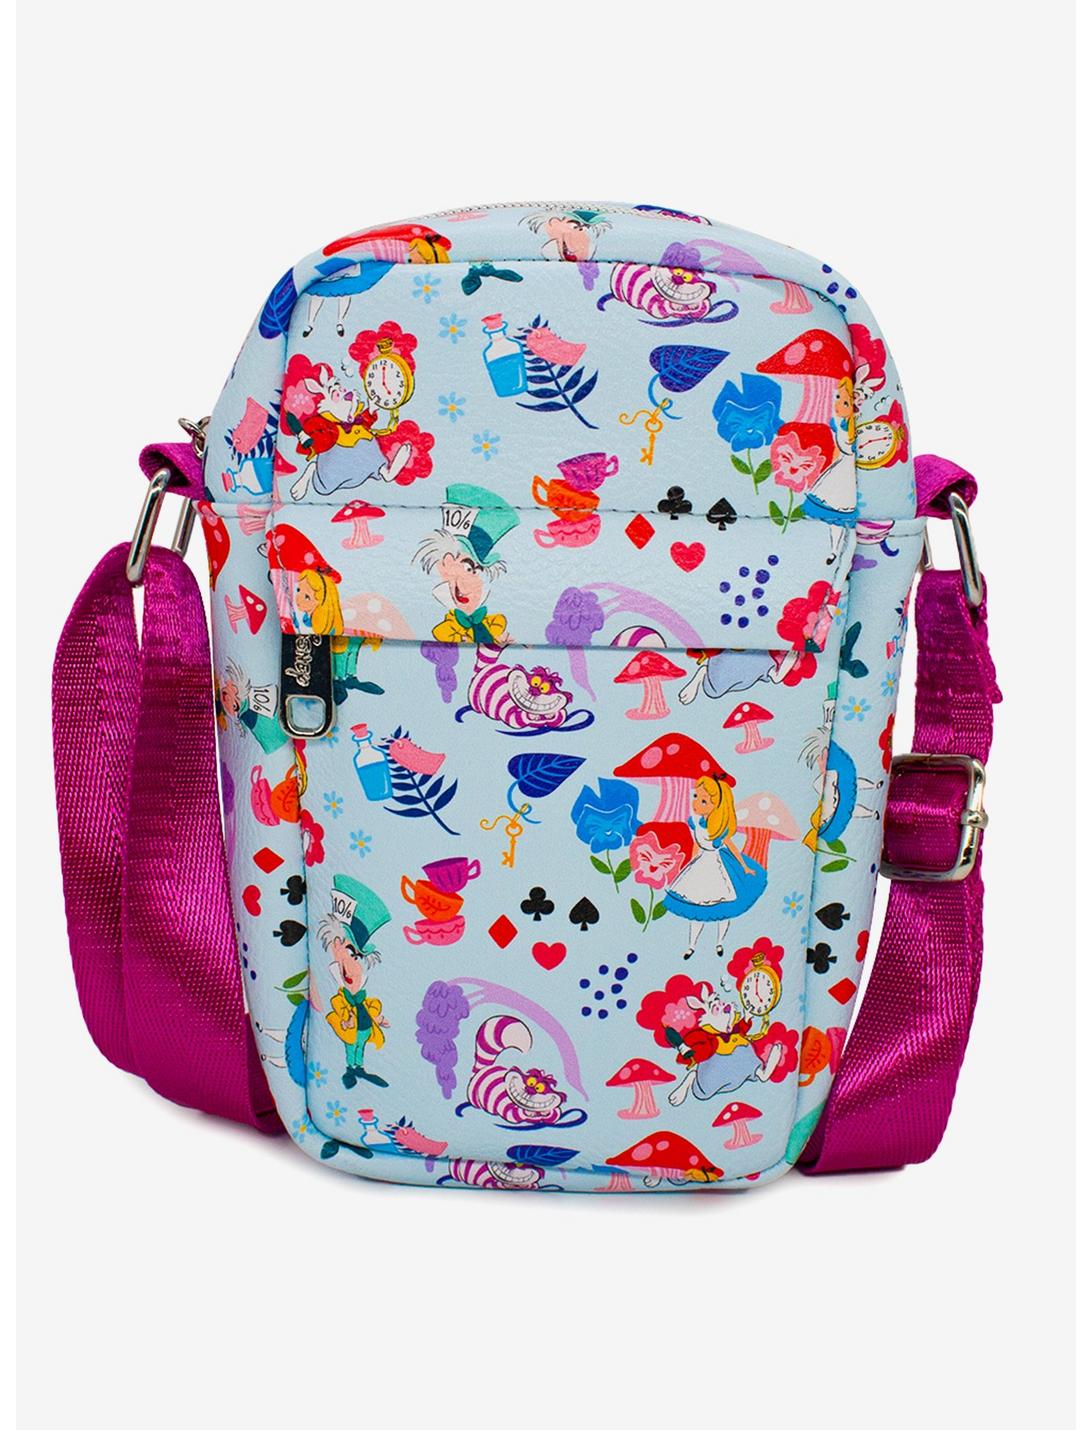 Disney Alice in Wonderland Allover Print 16" Girls Large Backpack